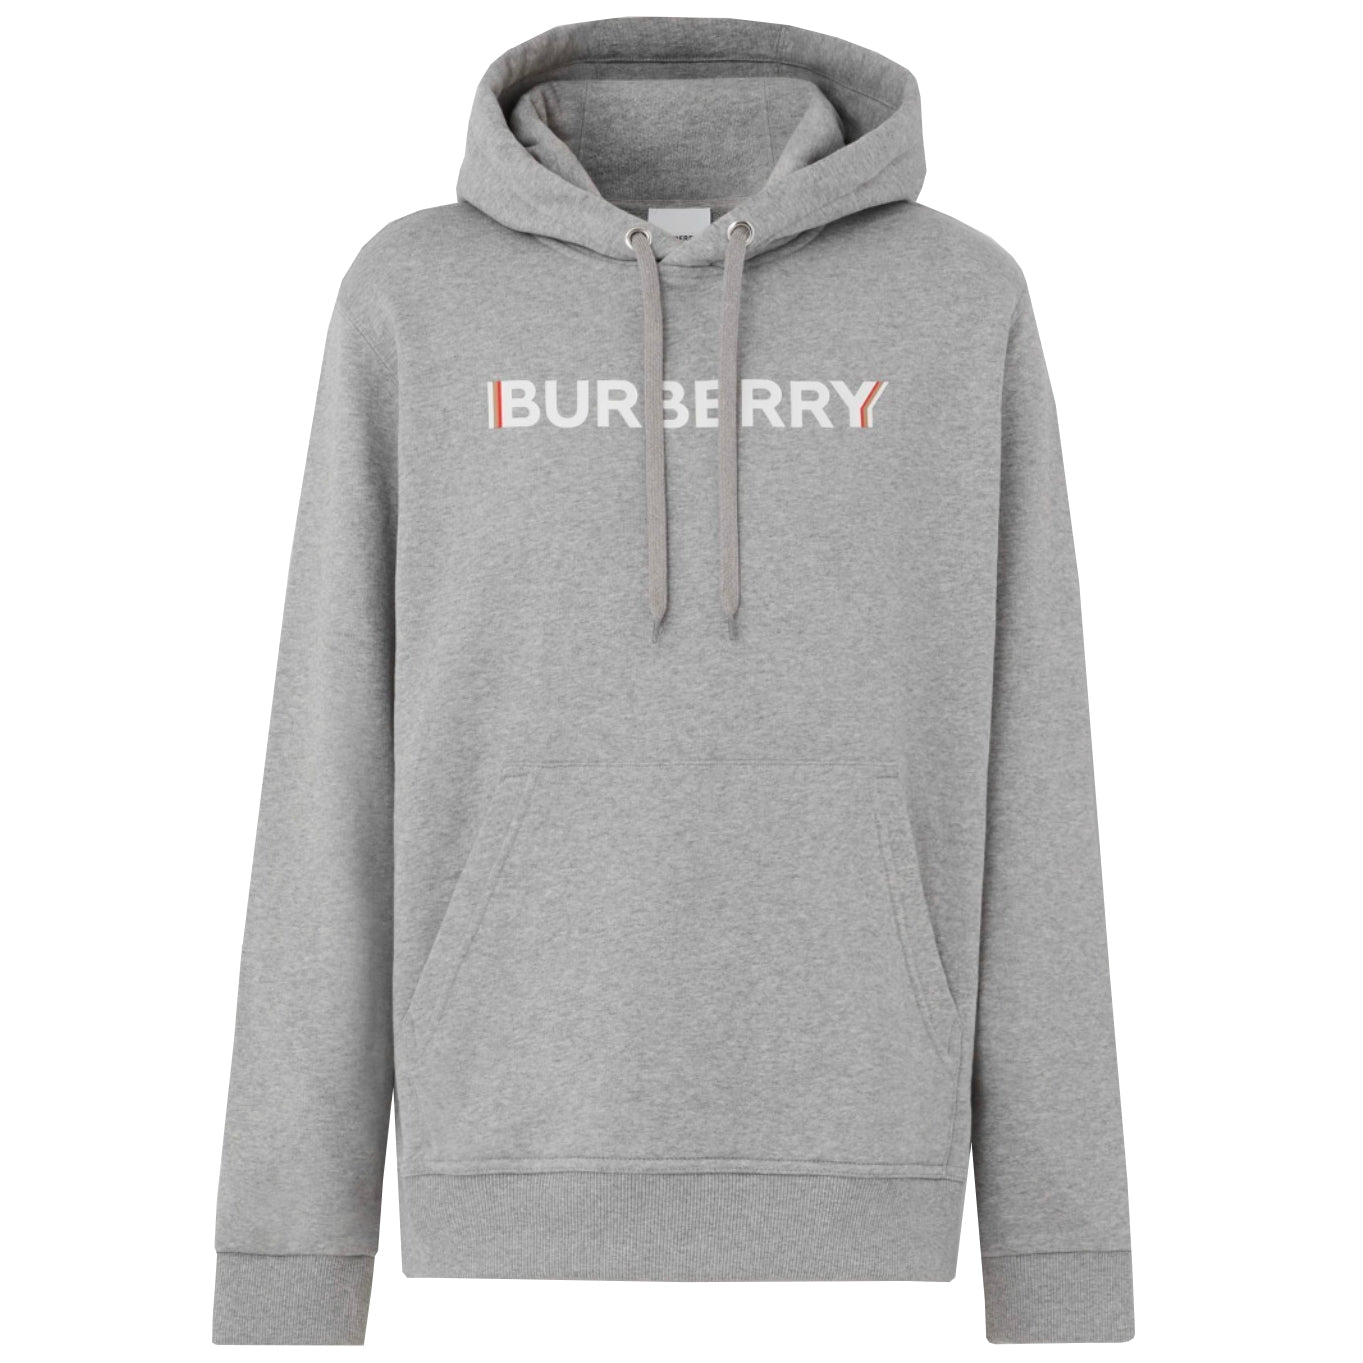 Burberry Grey Logo Hoodie - DANYOUNGUK